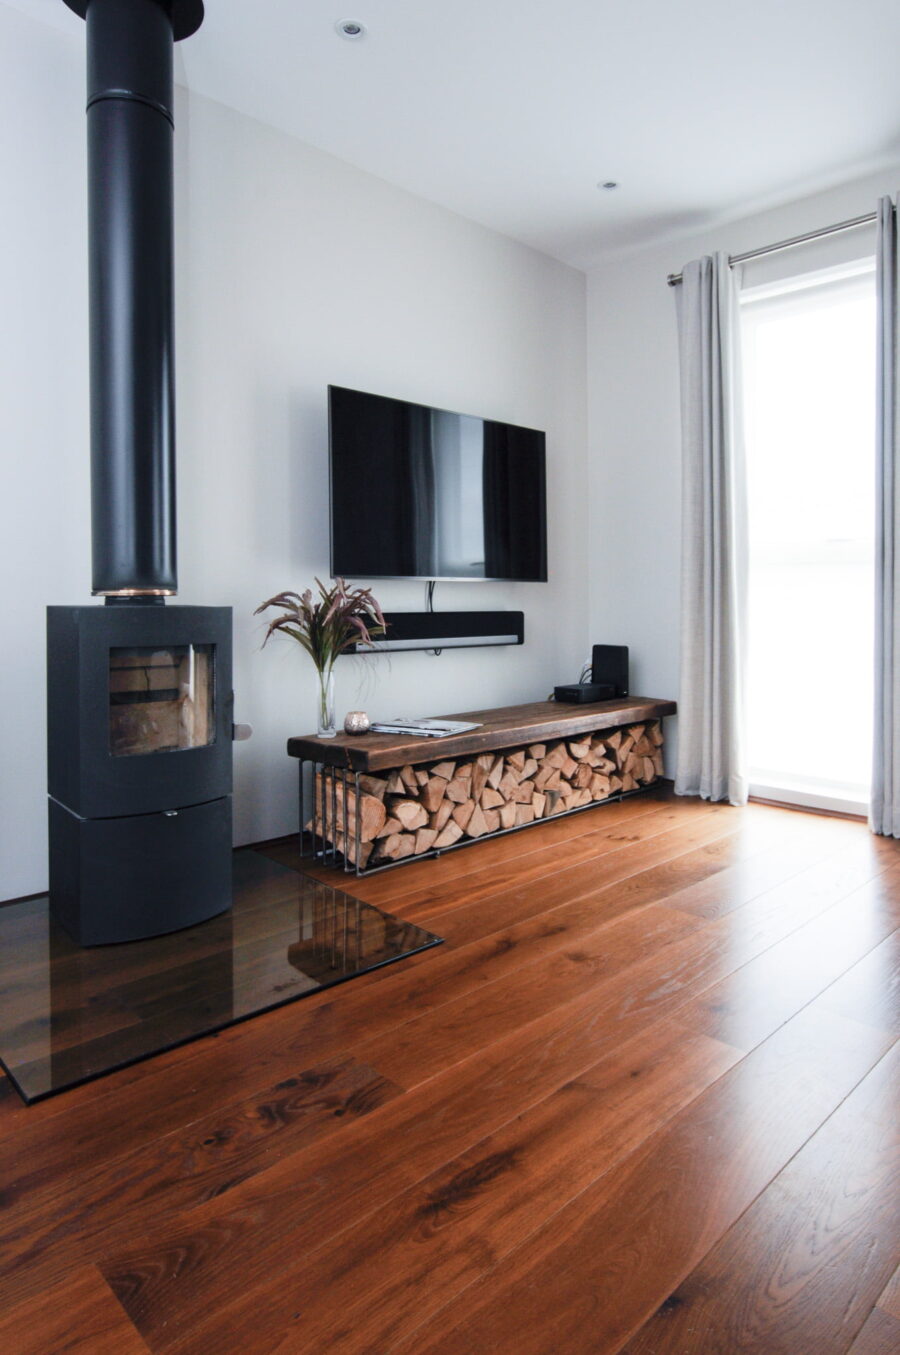 Thermo Baked engineered oak wood flooring in living room